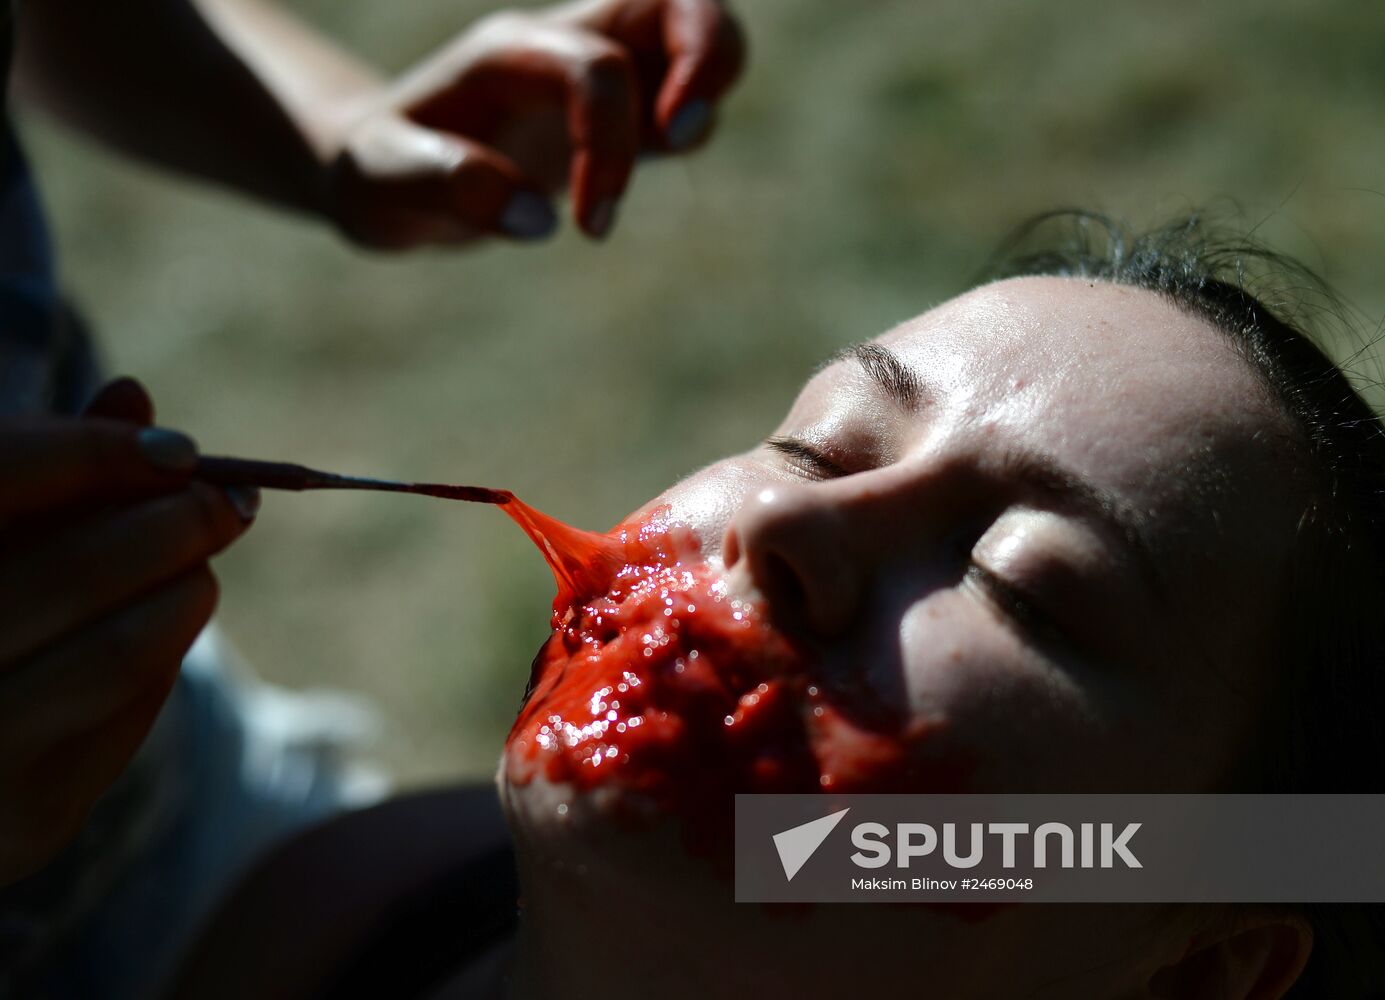 Sokolniki Park hosts Zombie Race